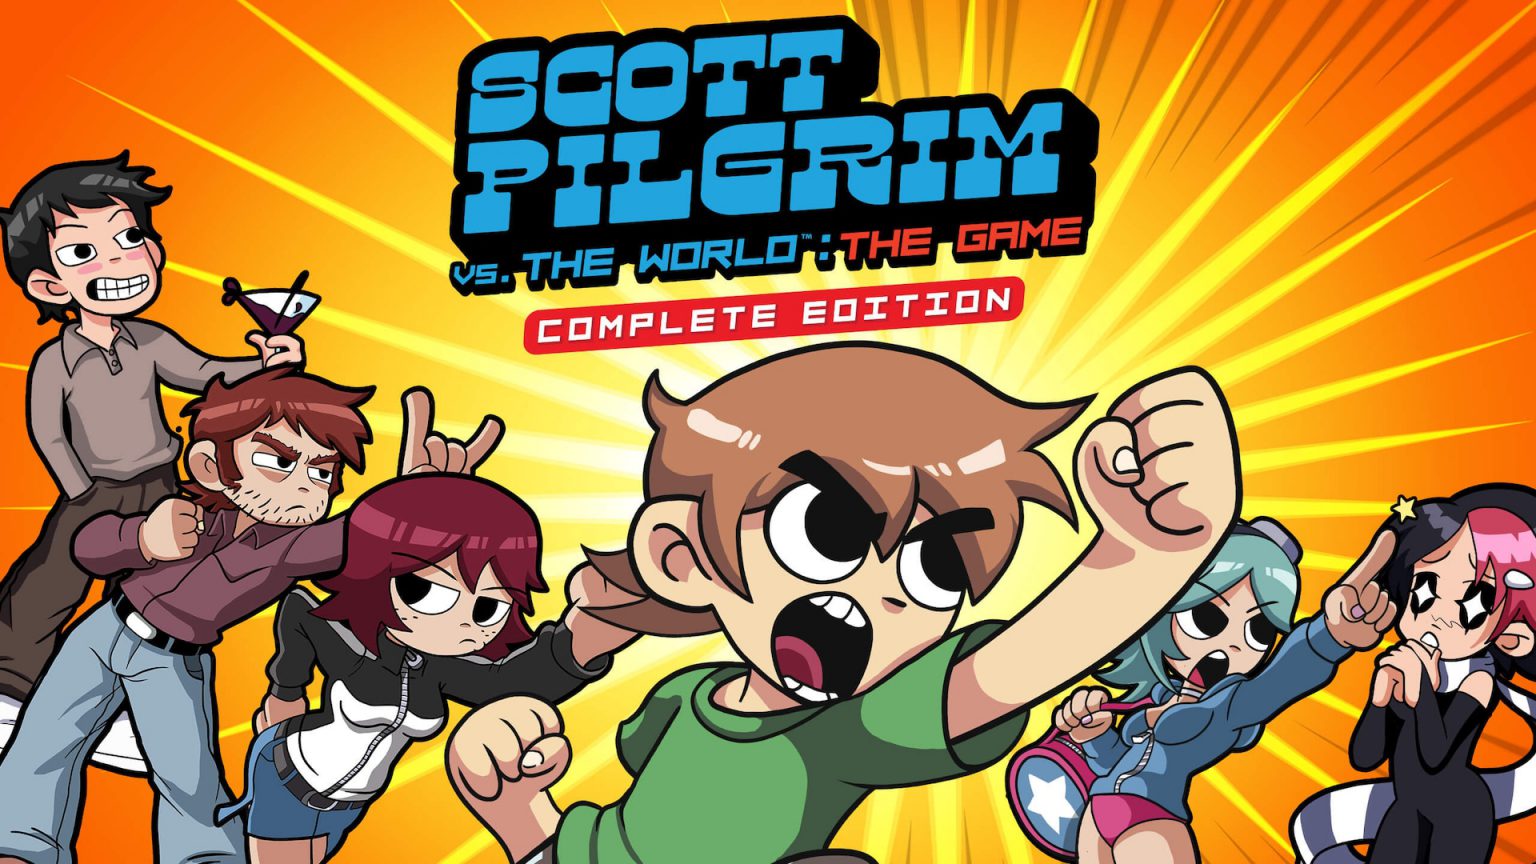 Scott Pilgrim vs. the world complete edition - generacion xbox